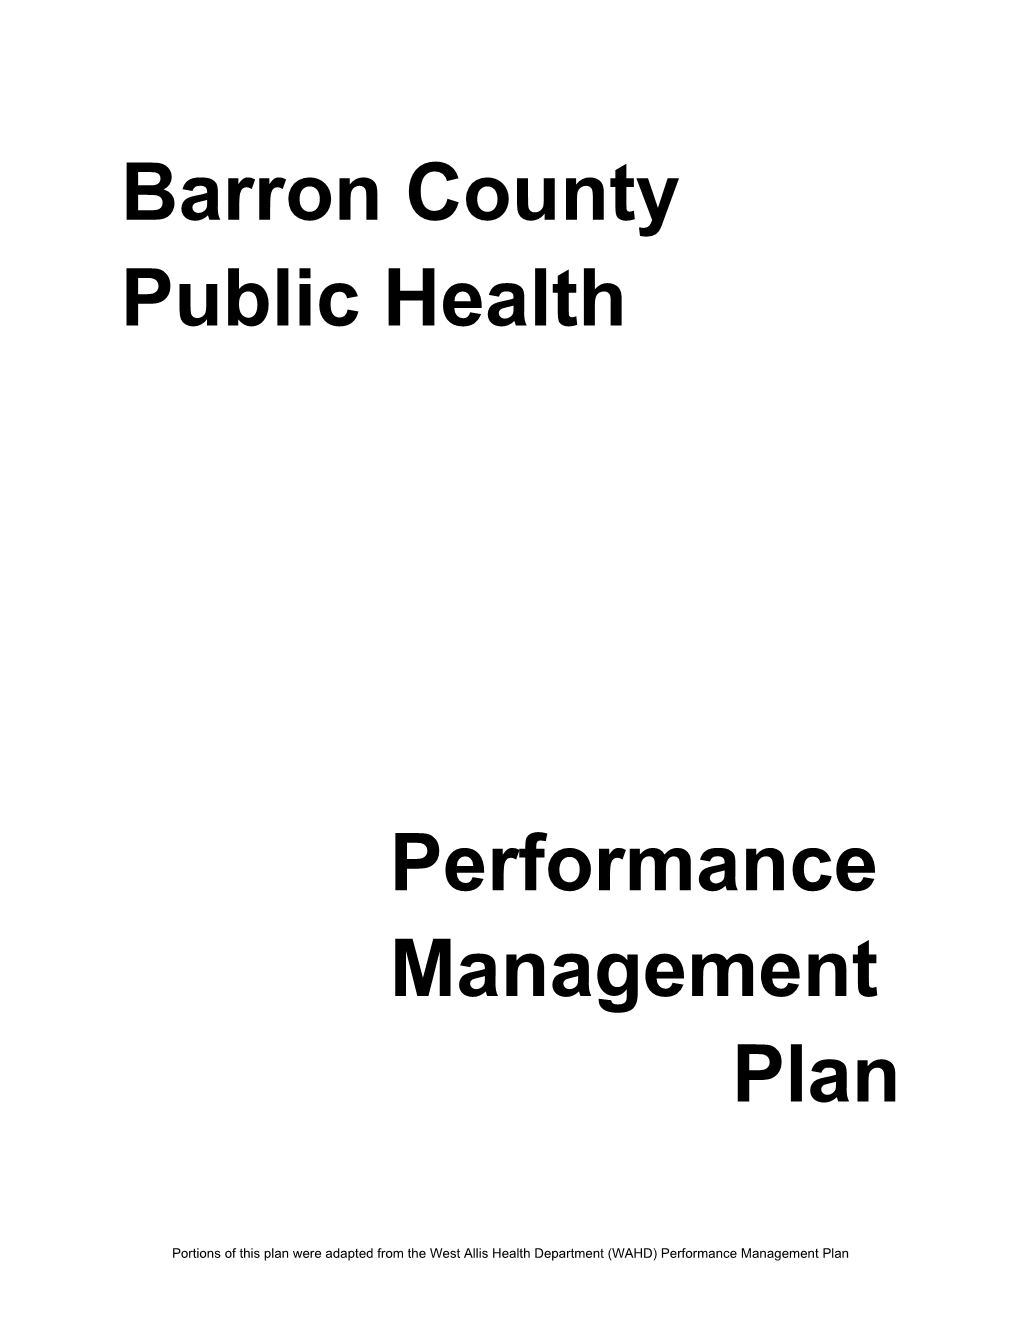 Draft Performance Management Plan